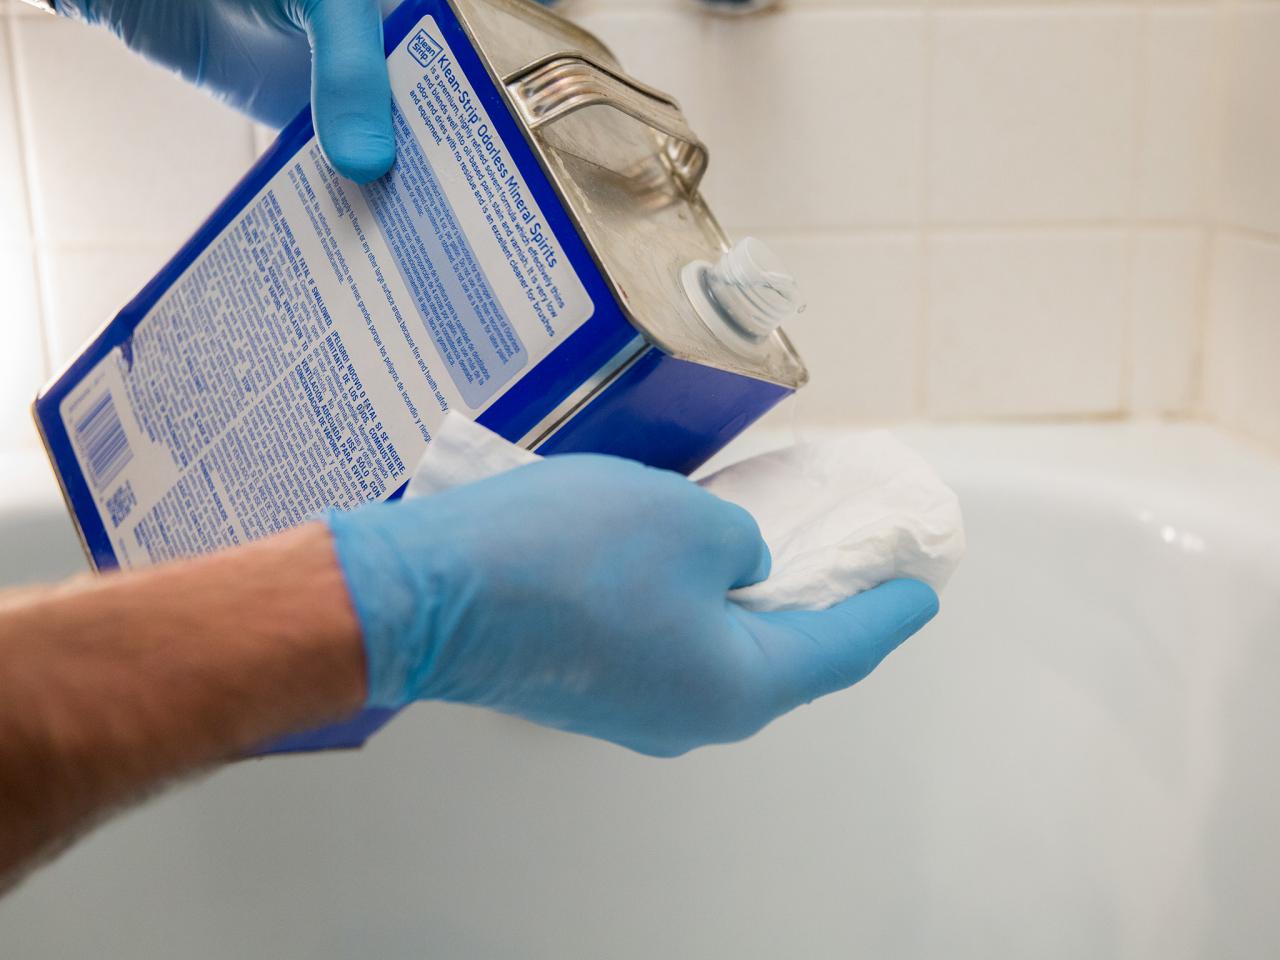 How To Caulk A Shower Recaulking, How To Remove Old Caulk From Bathtub